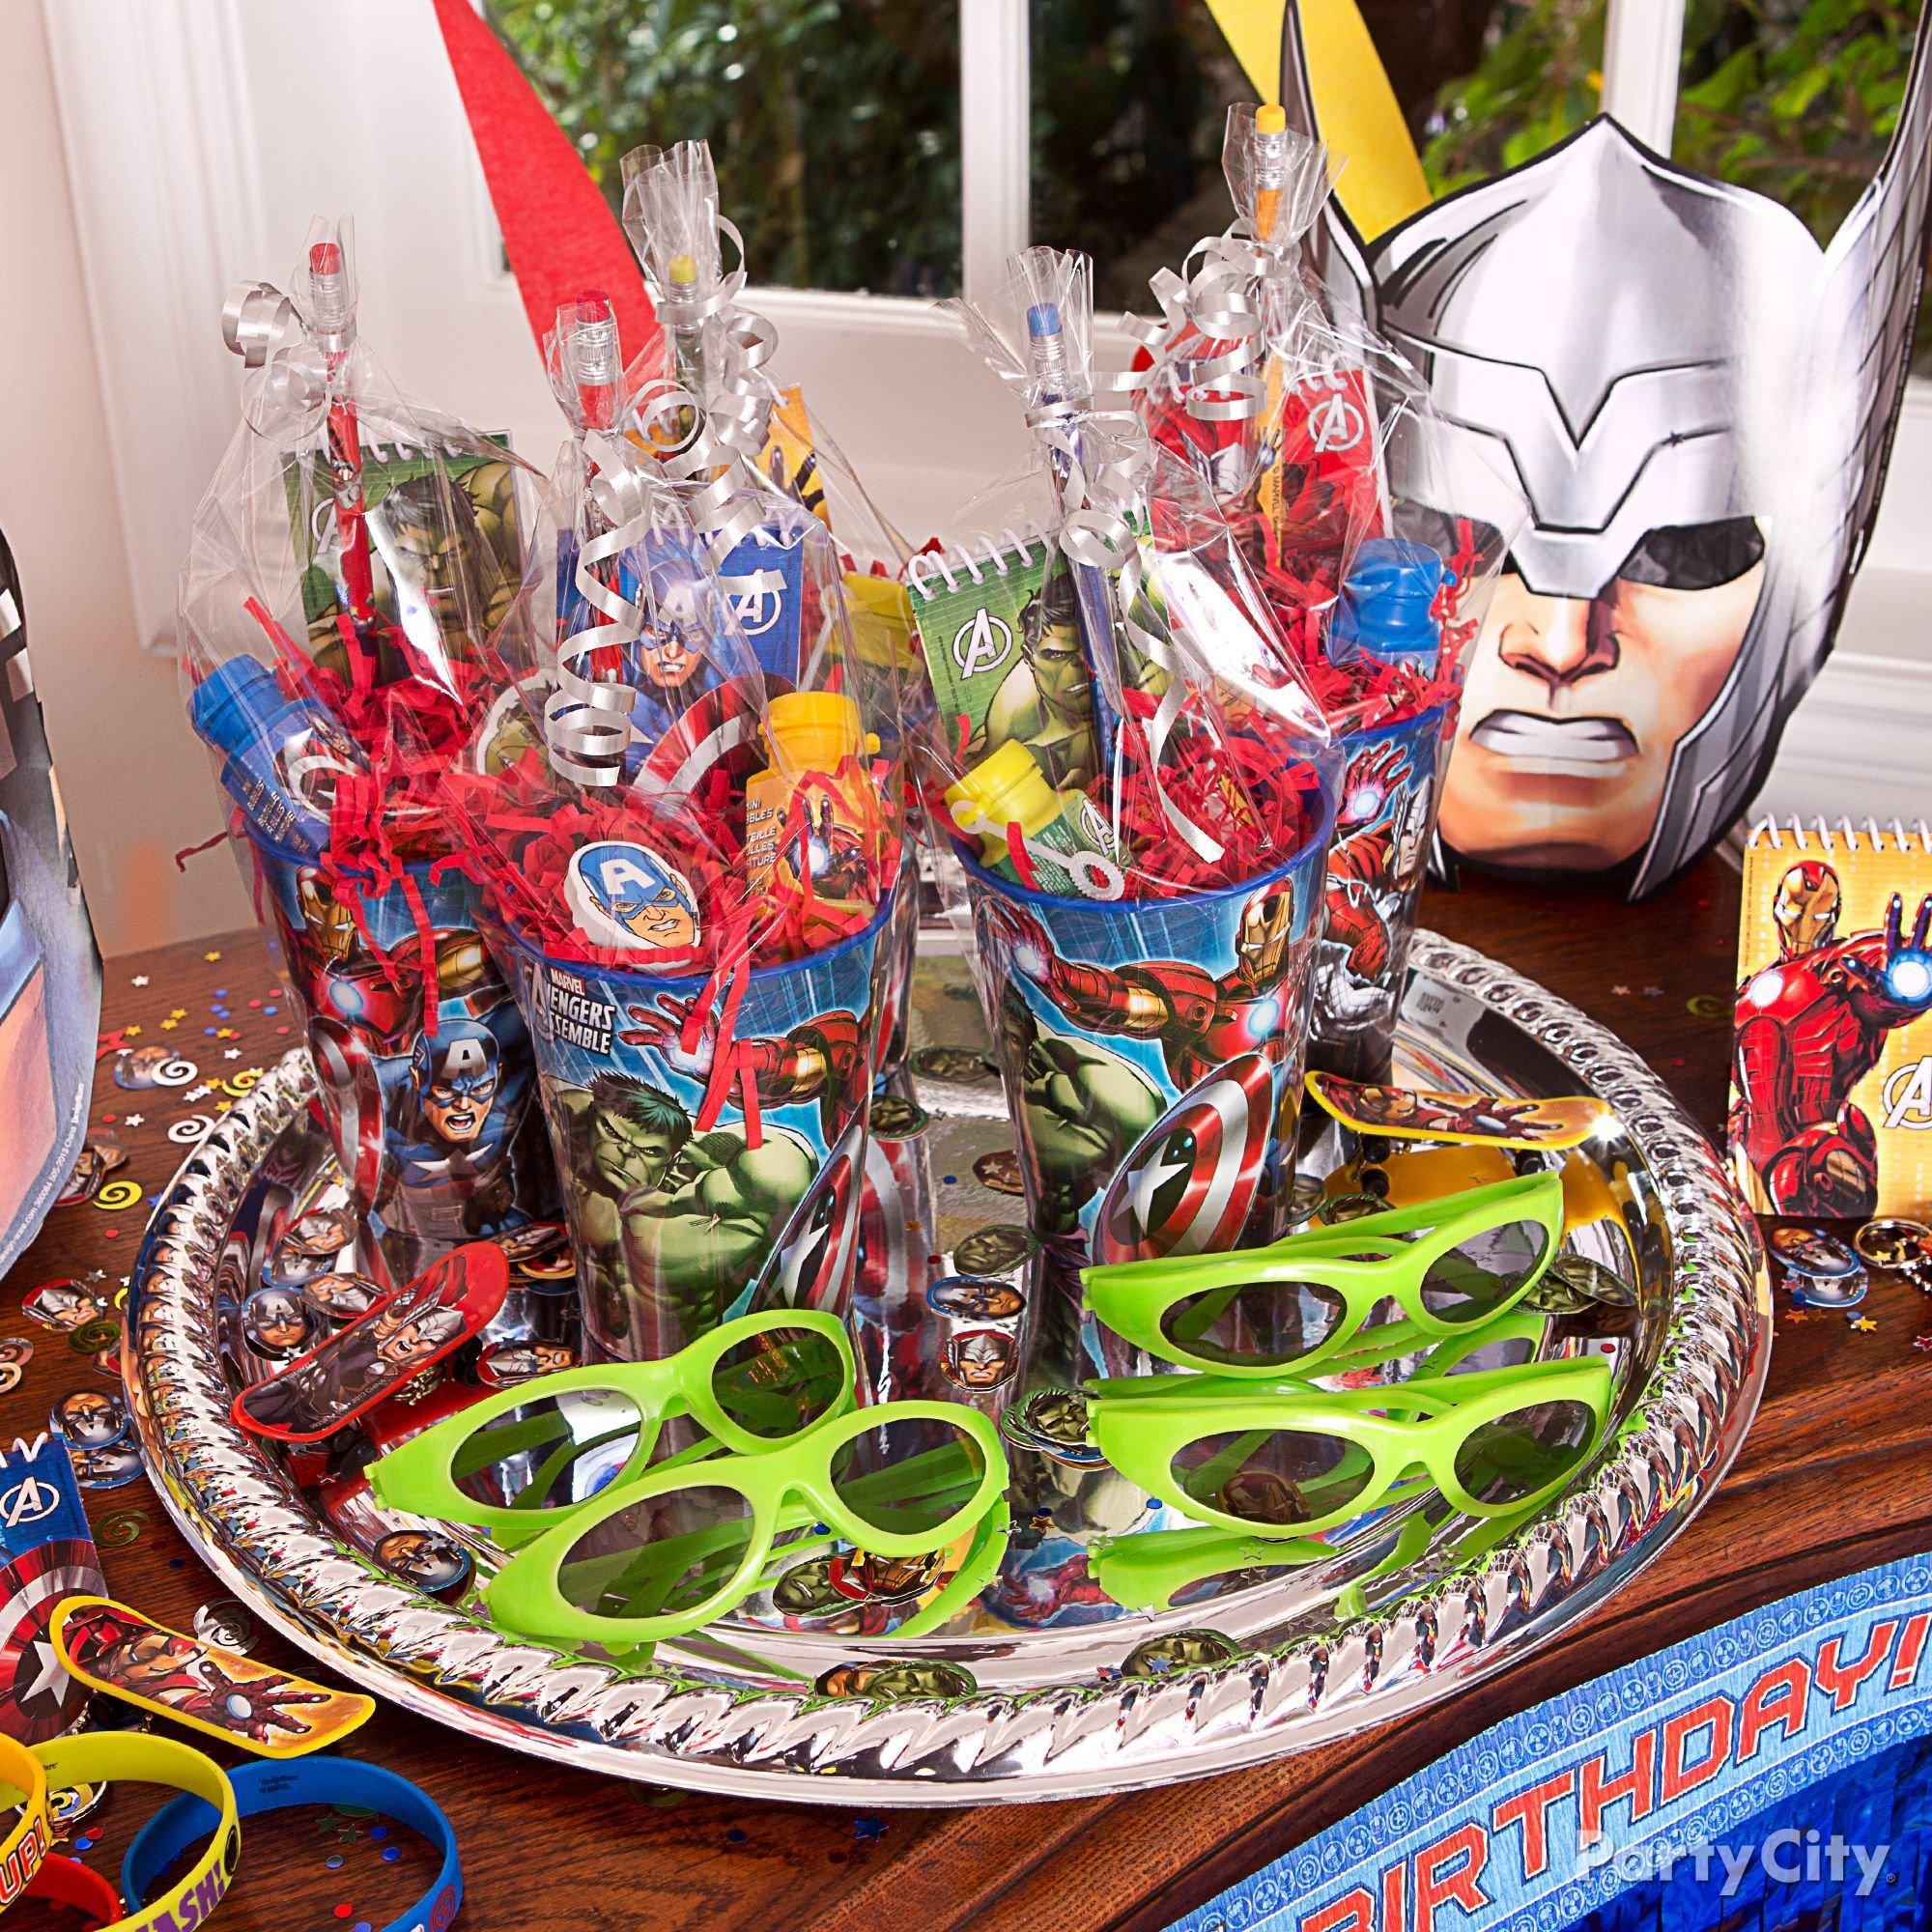 Avengers Pinata  Birthday Party Supplies, Marvel Heroes Stuff